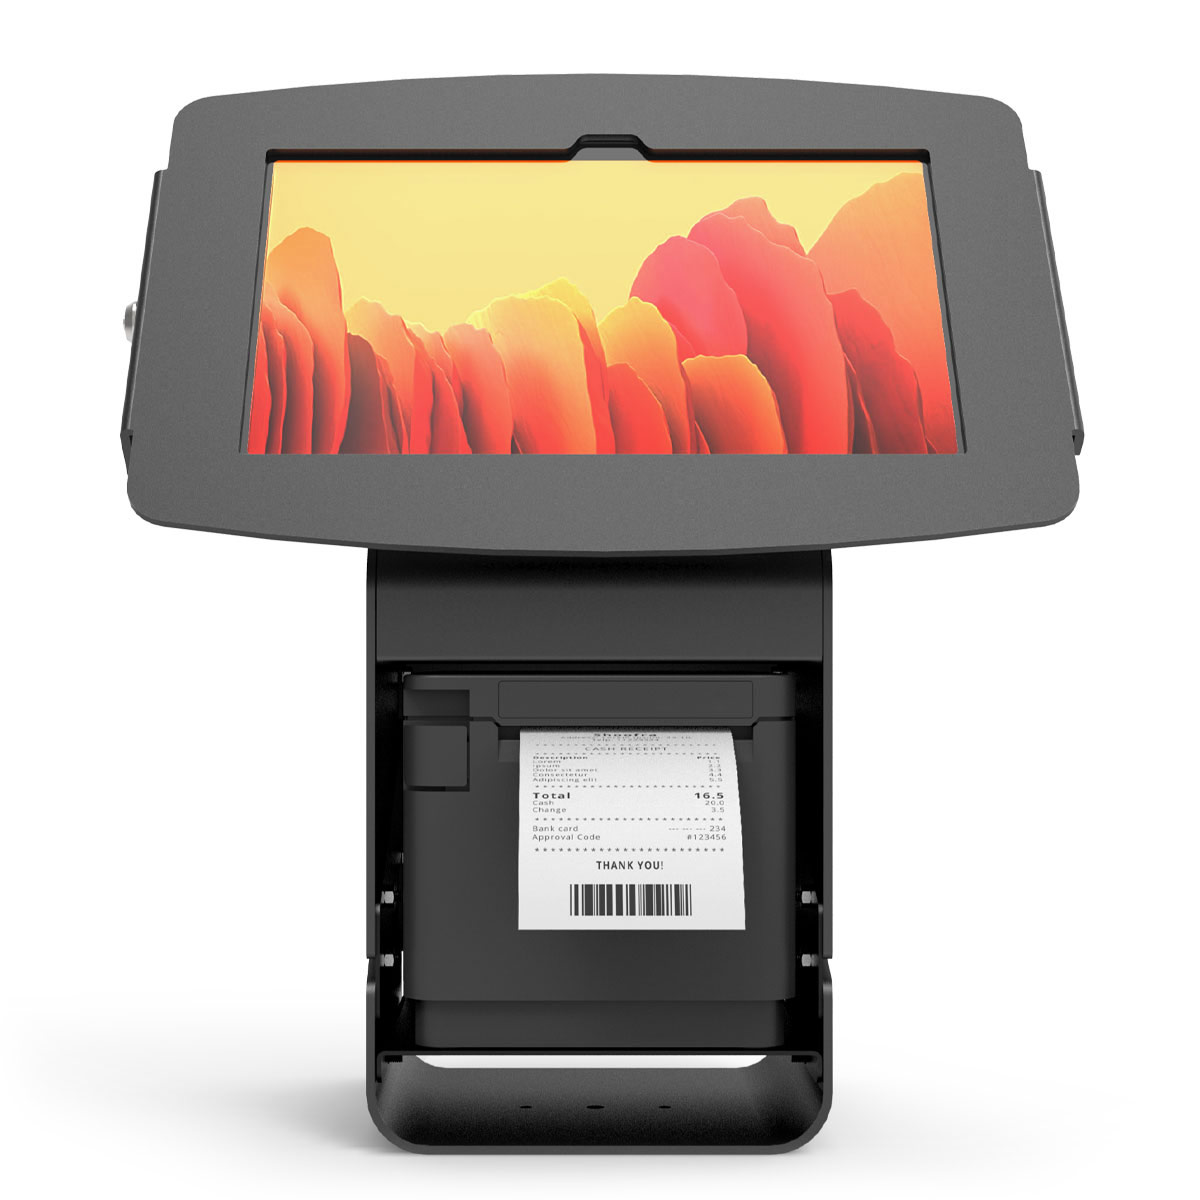 Space Galaxy Tab A7 10.4 POS Printer Kiosk